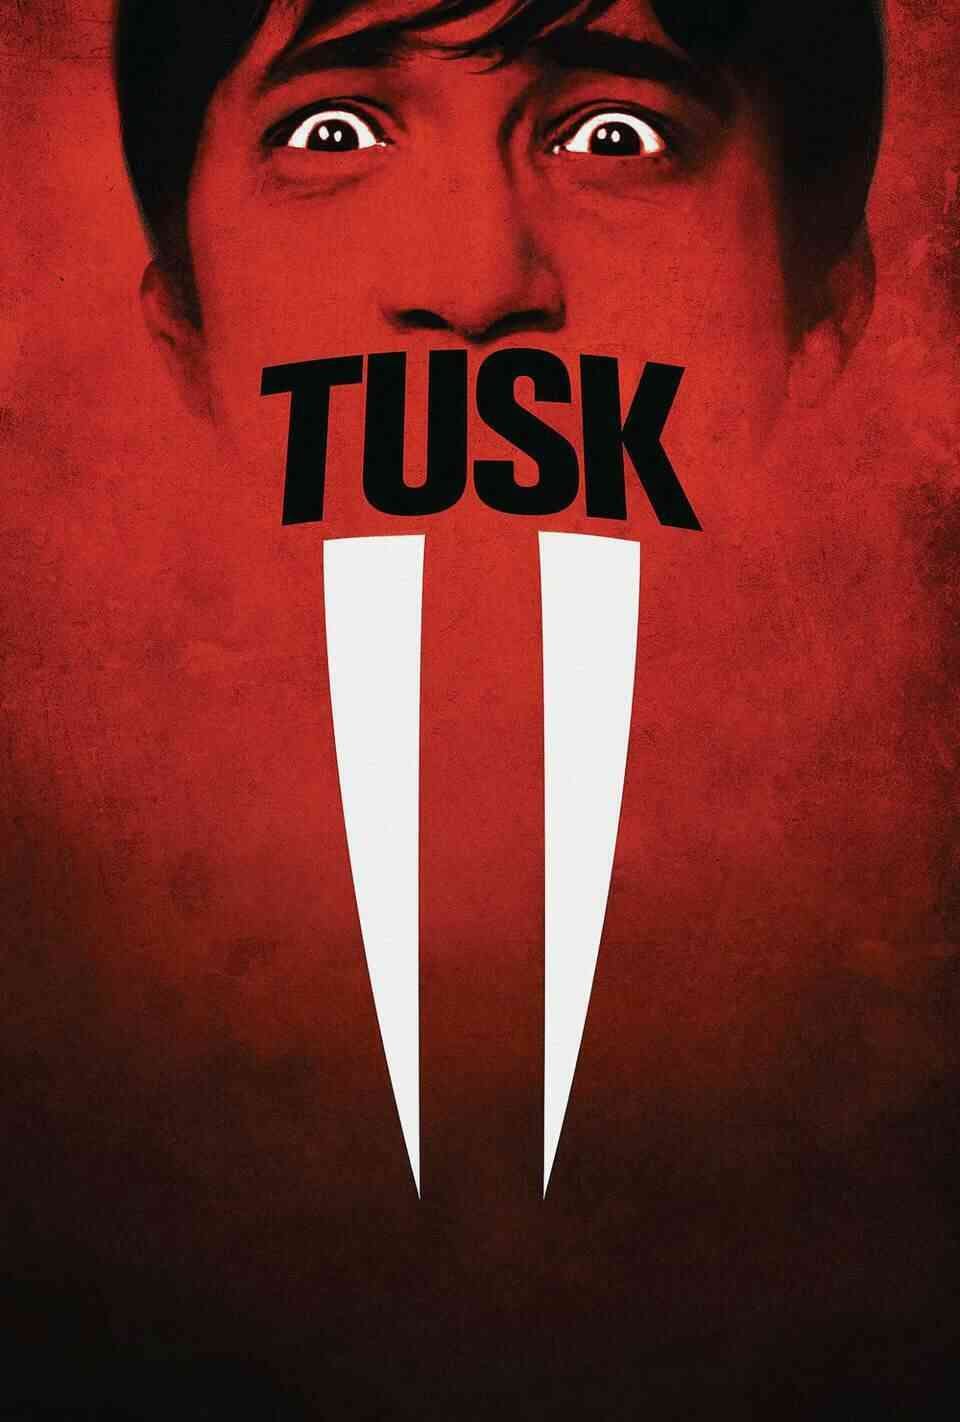 Read Tusk screenplay (poster)